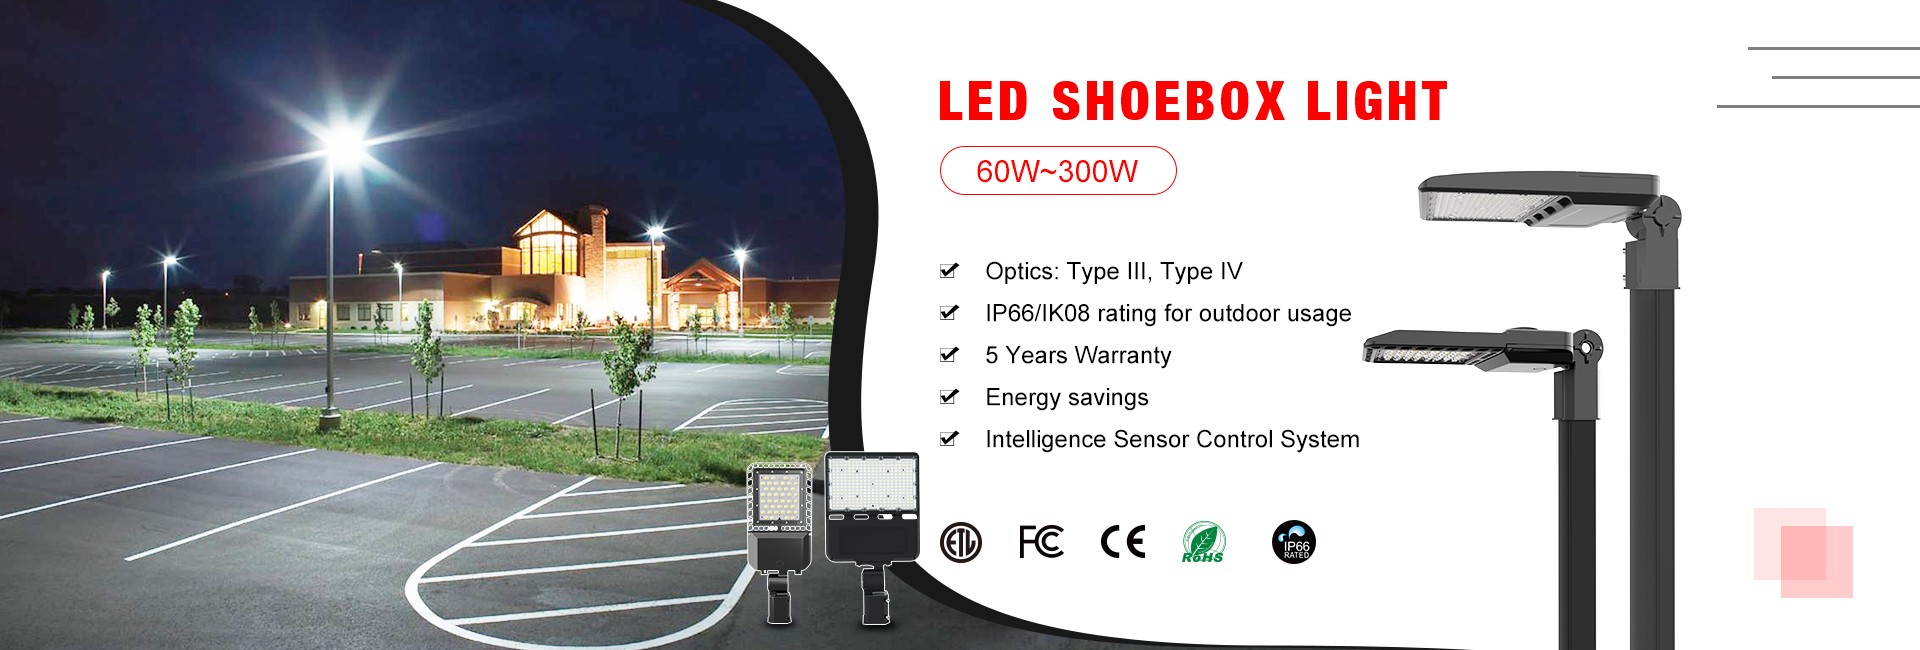 LED Shebox Light